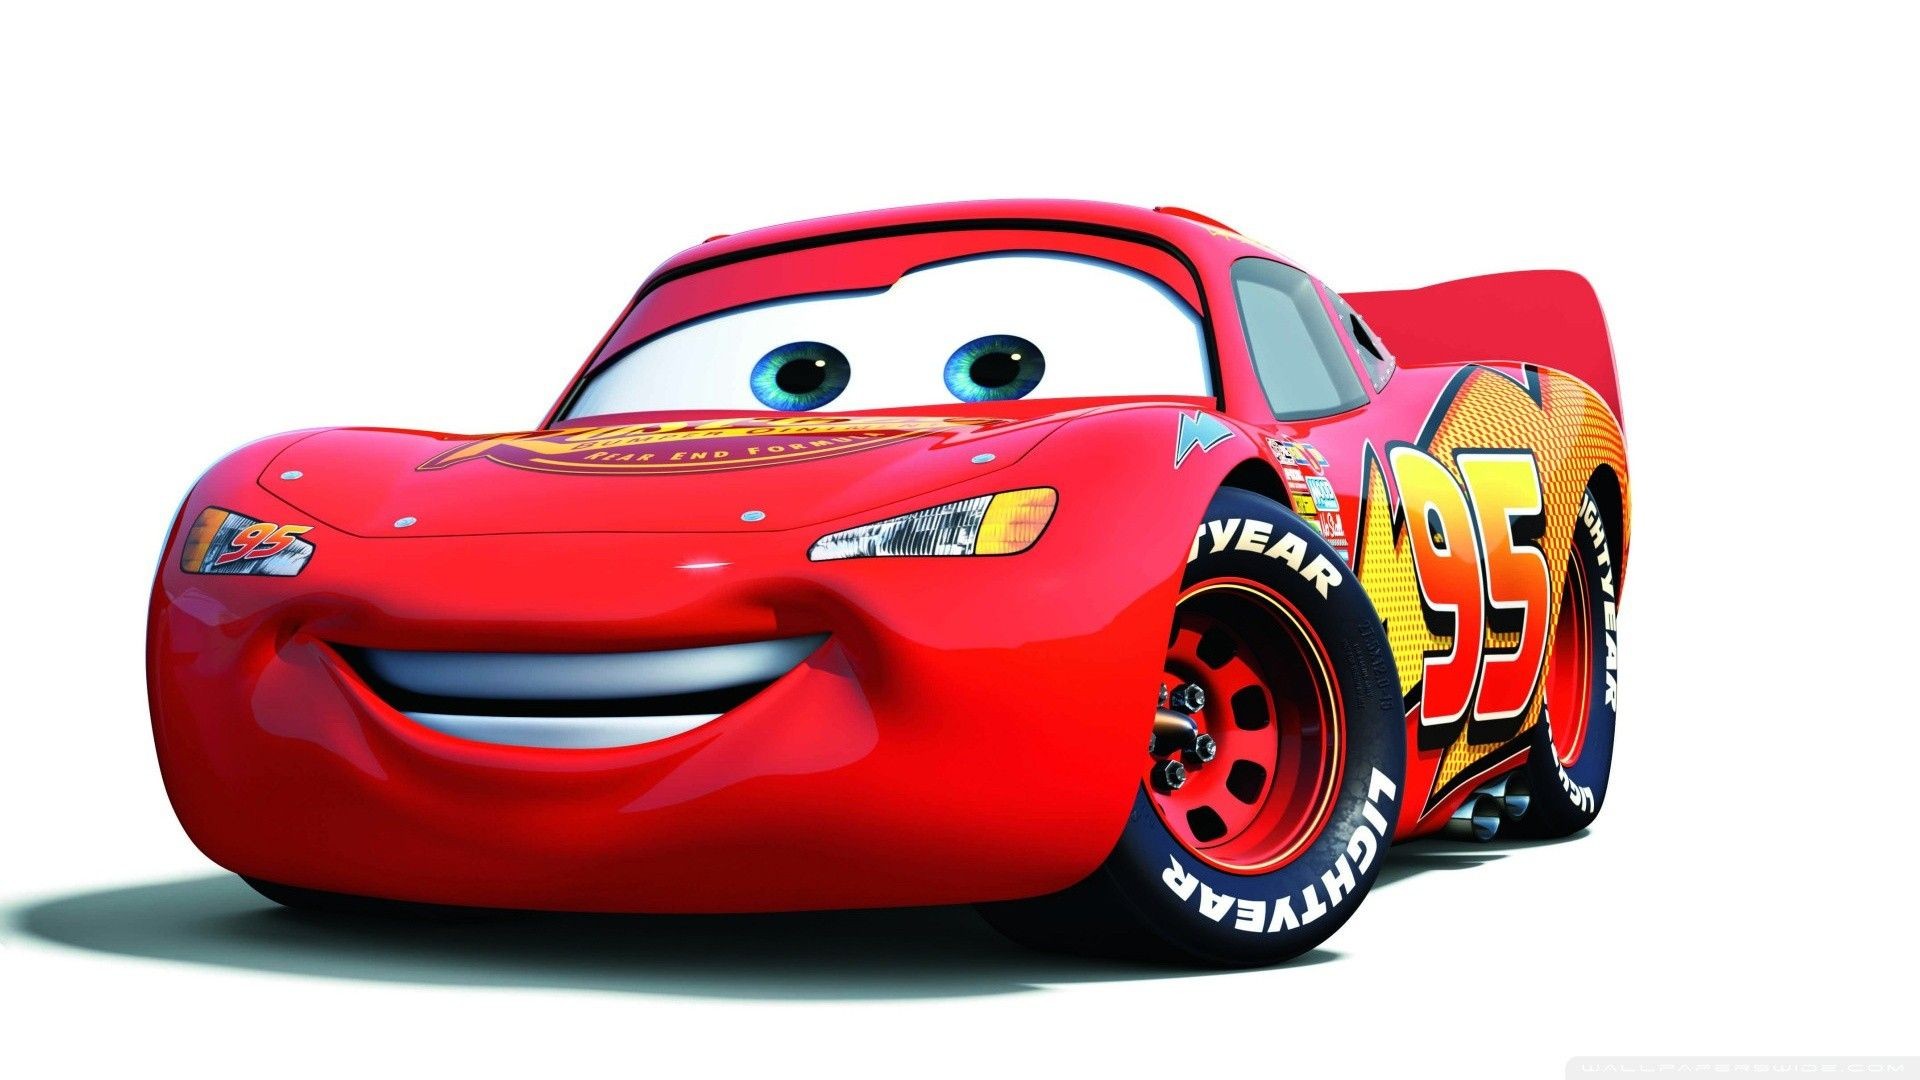 General 1920x1080 car Cars (movie) animated movies movies simple background white background Pixar Animation Studios Movie Vehicles